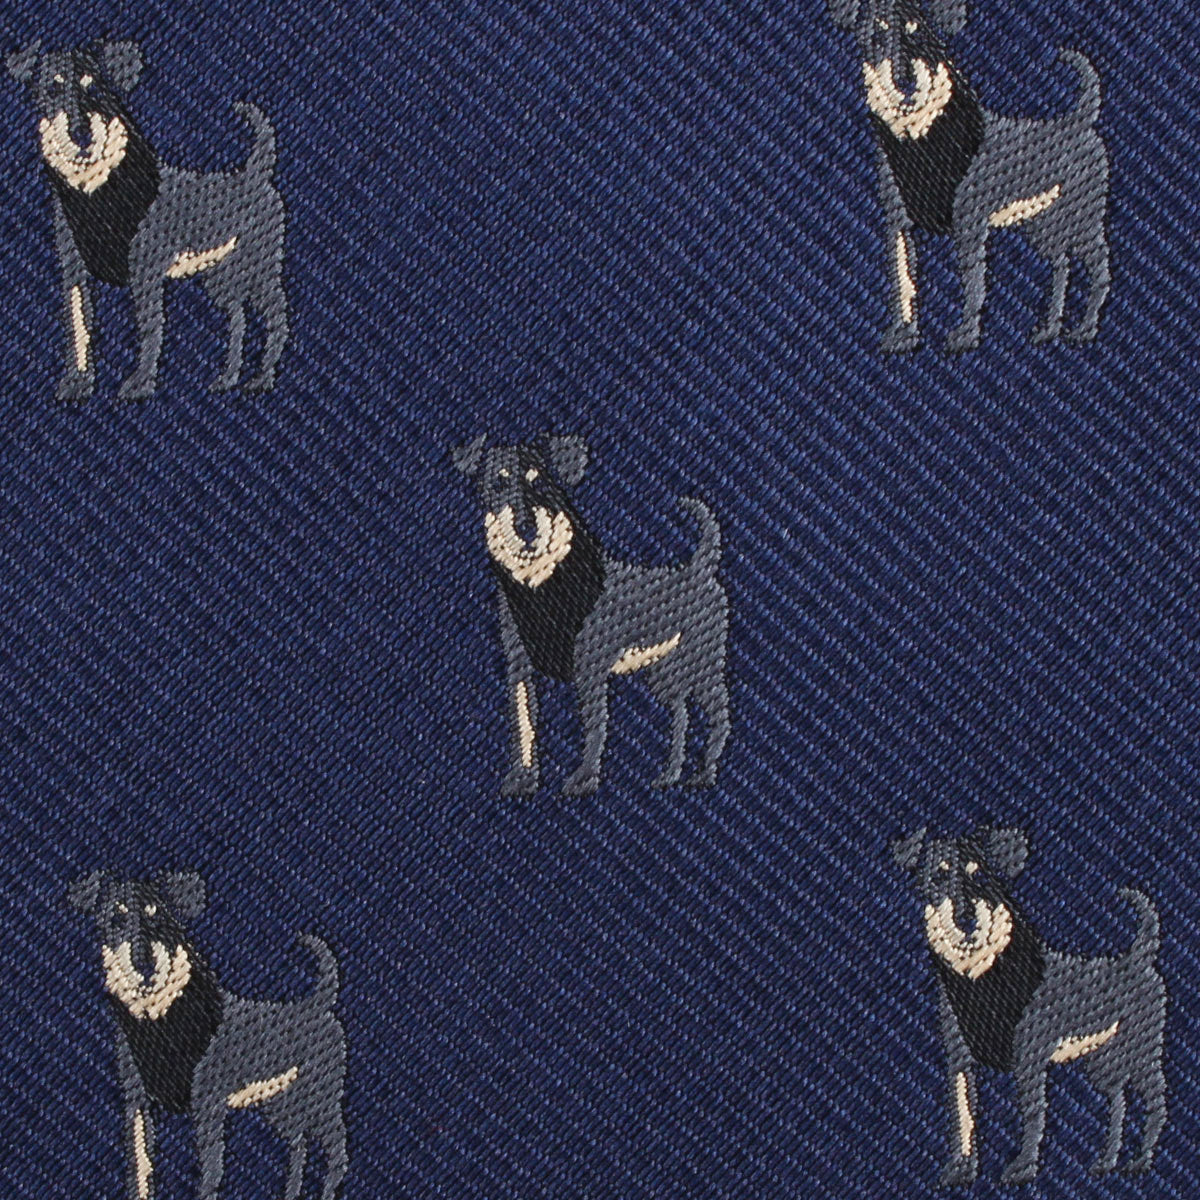 Rottweiler Dog Fabric Skinny Tie